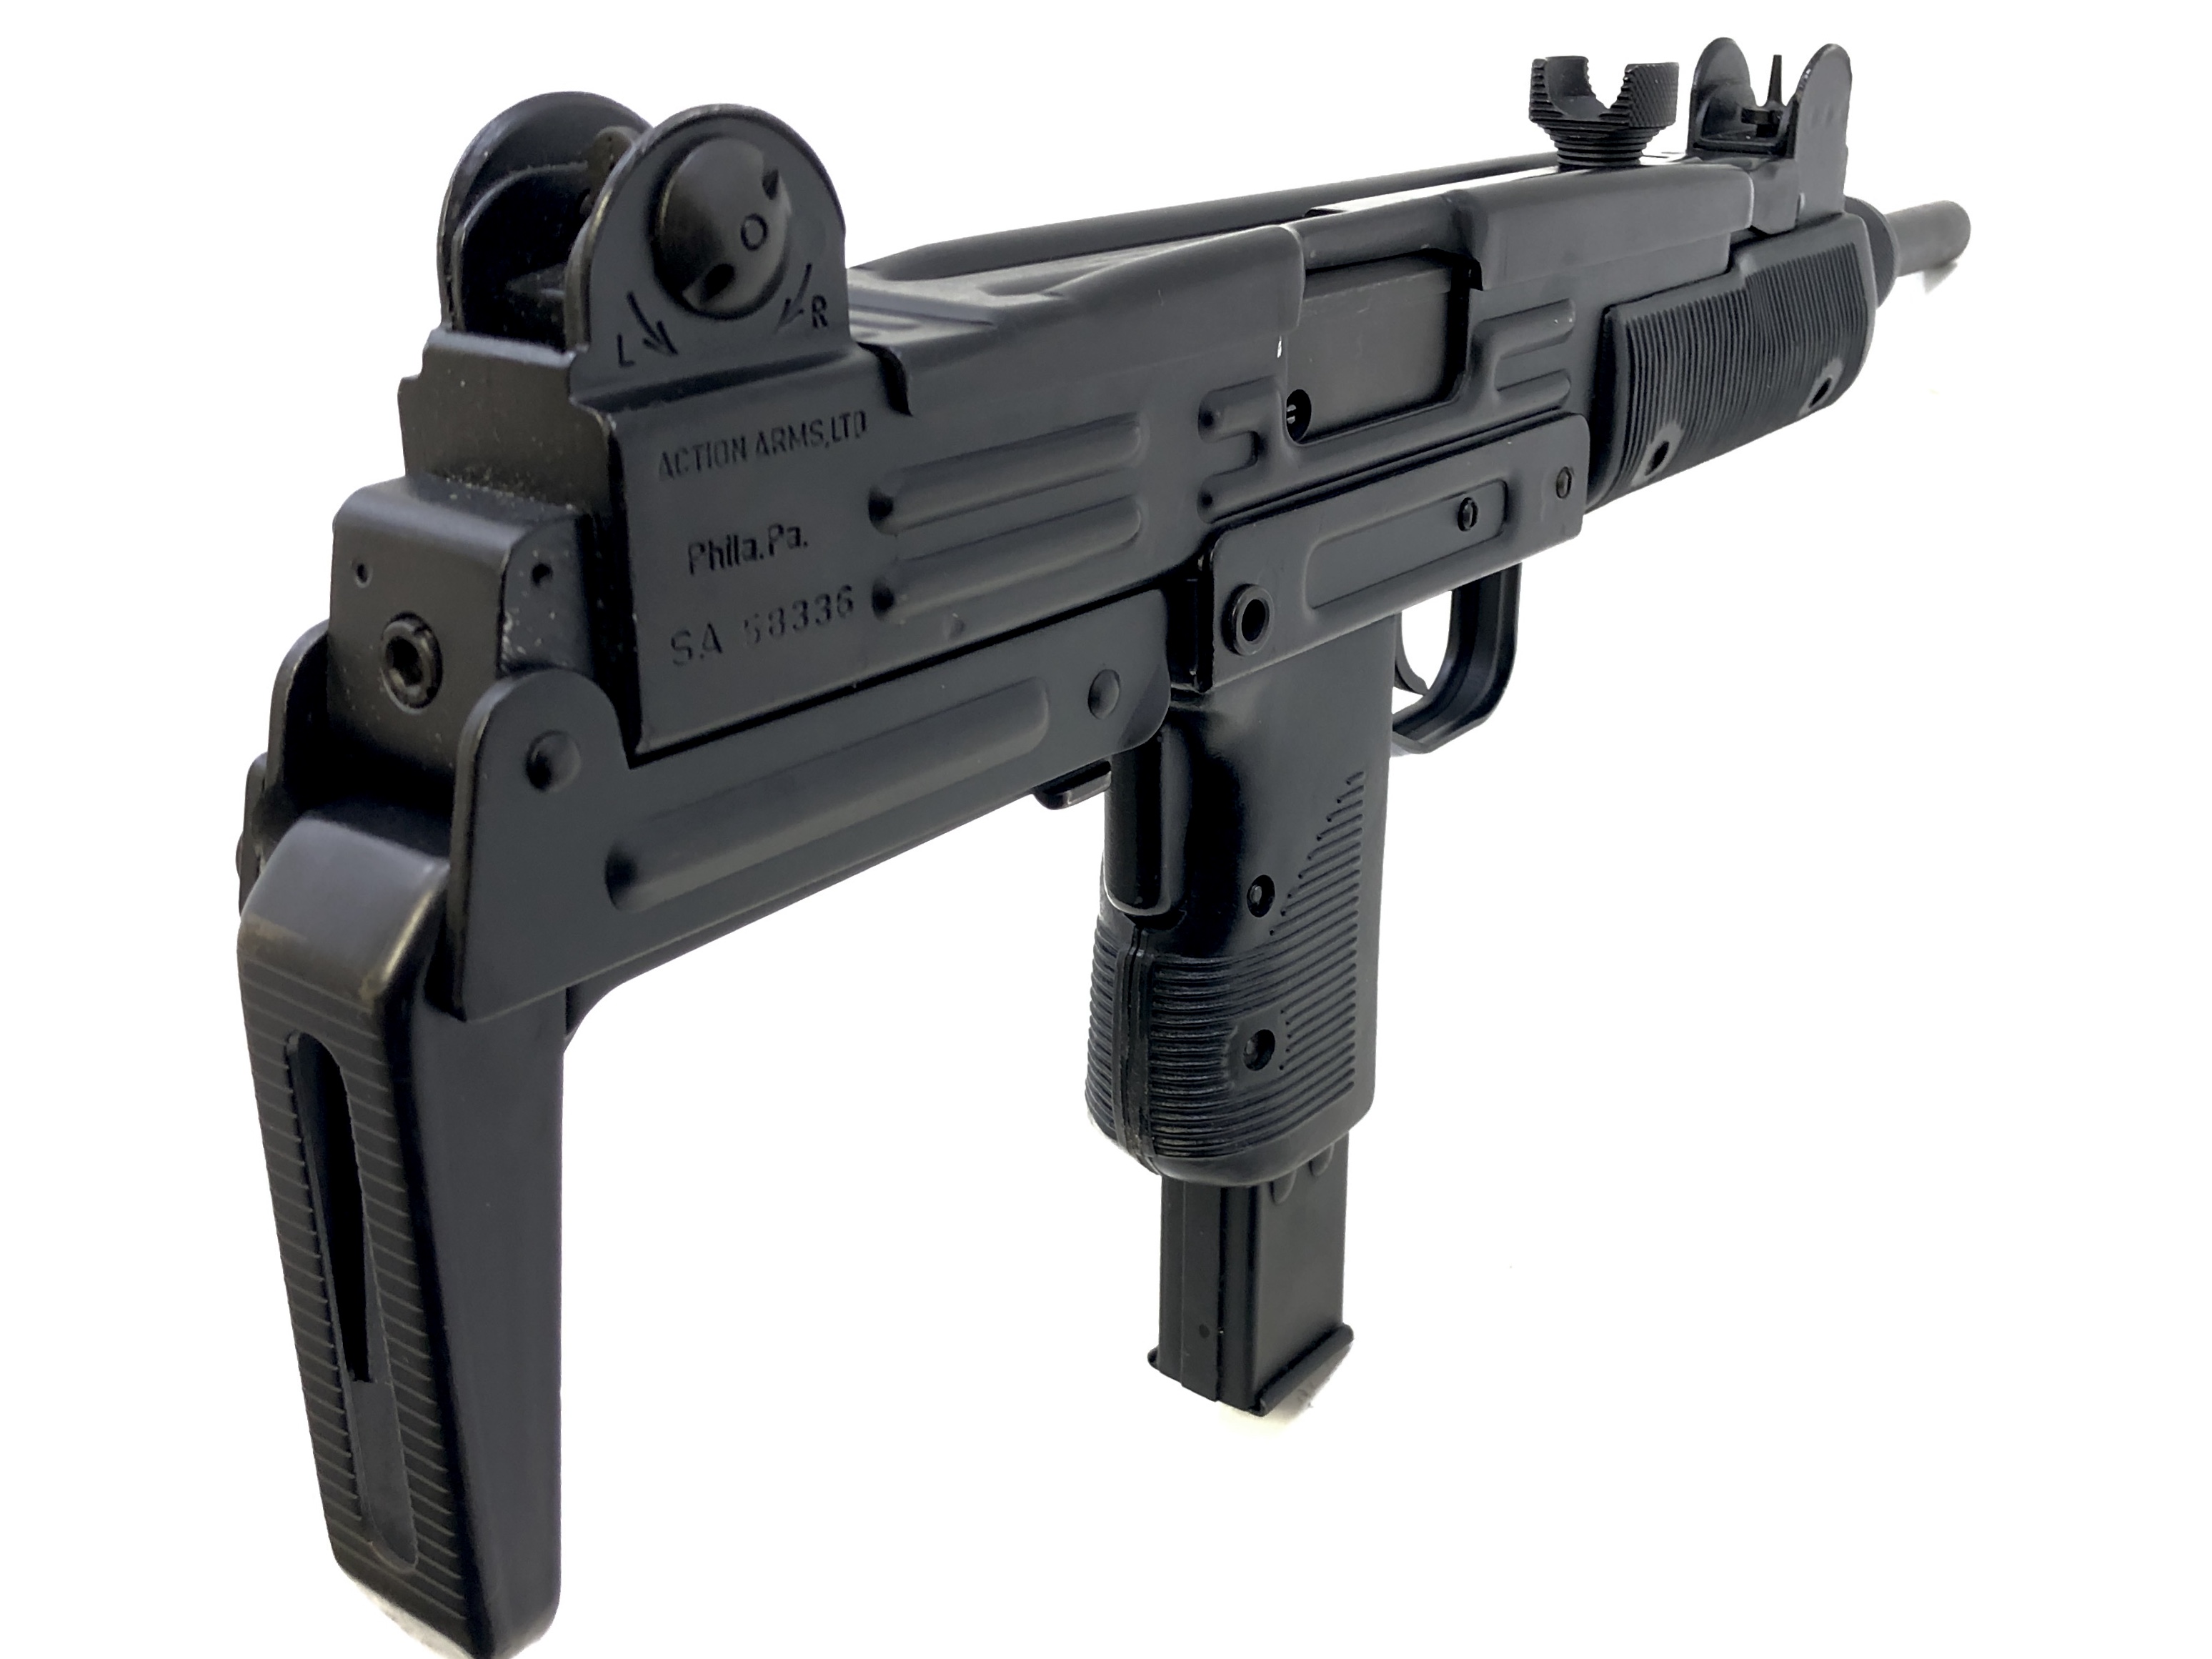 GunSpot Guns for sale Gun Auction: IMI Model B Uzi 9mm Transferable